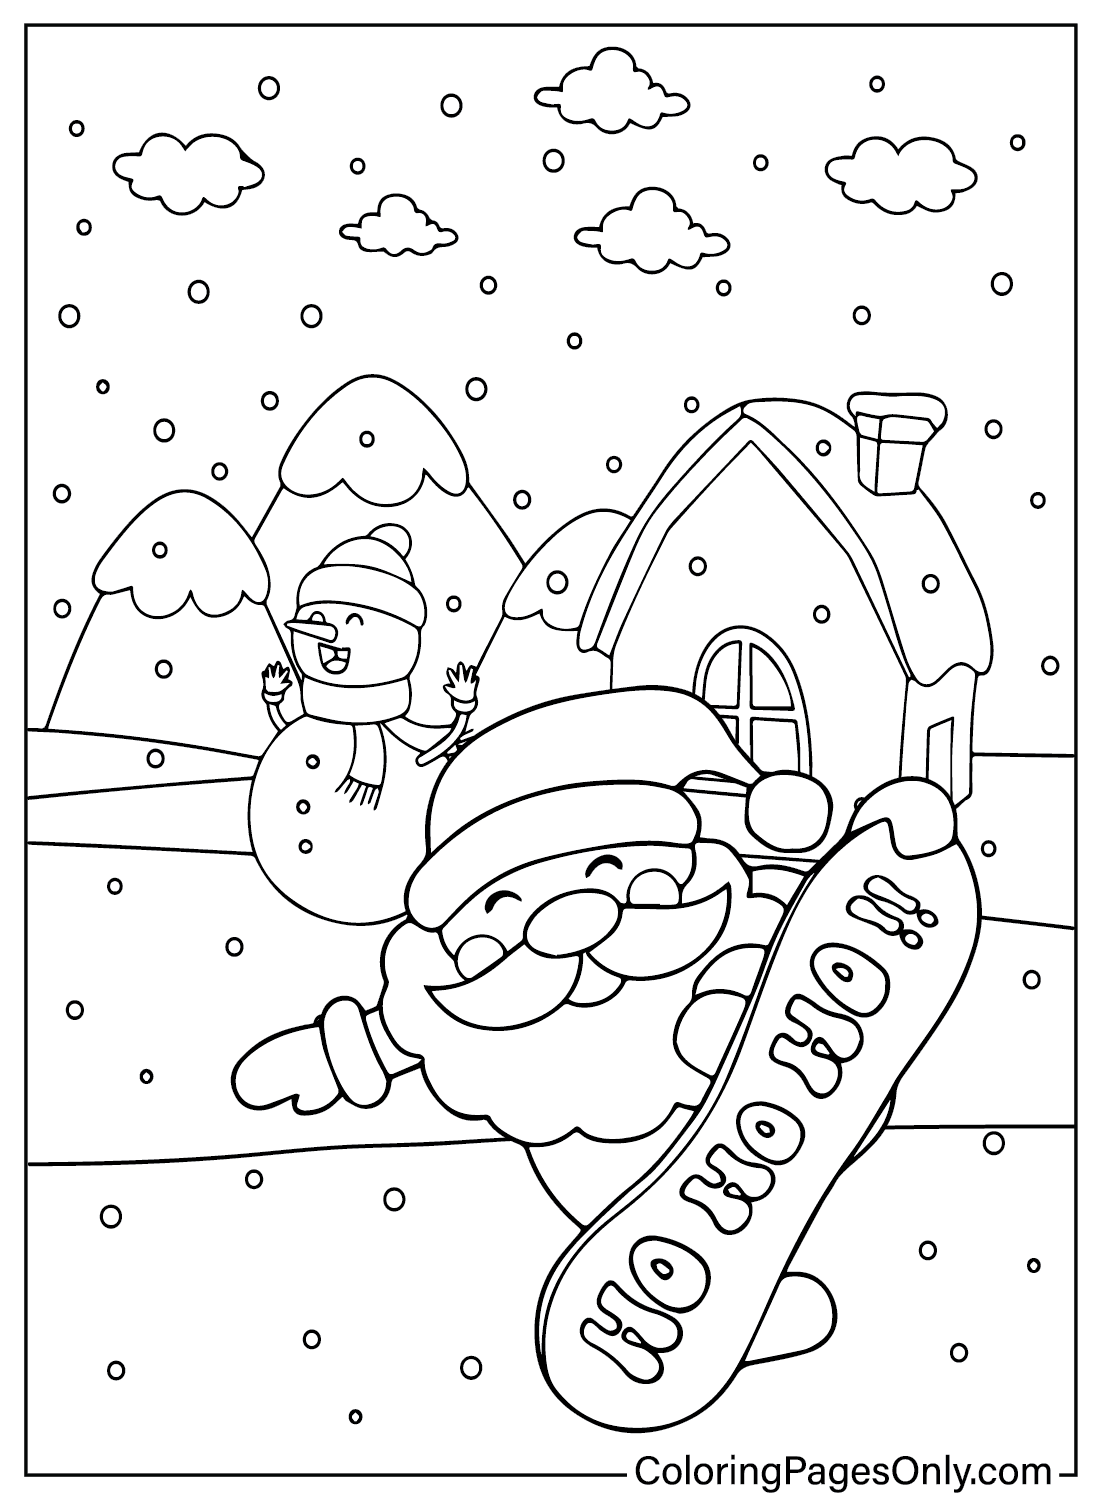 Página para colorir do Papai Noel para impressão gratuita do Papai Noel